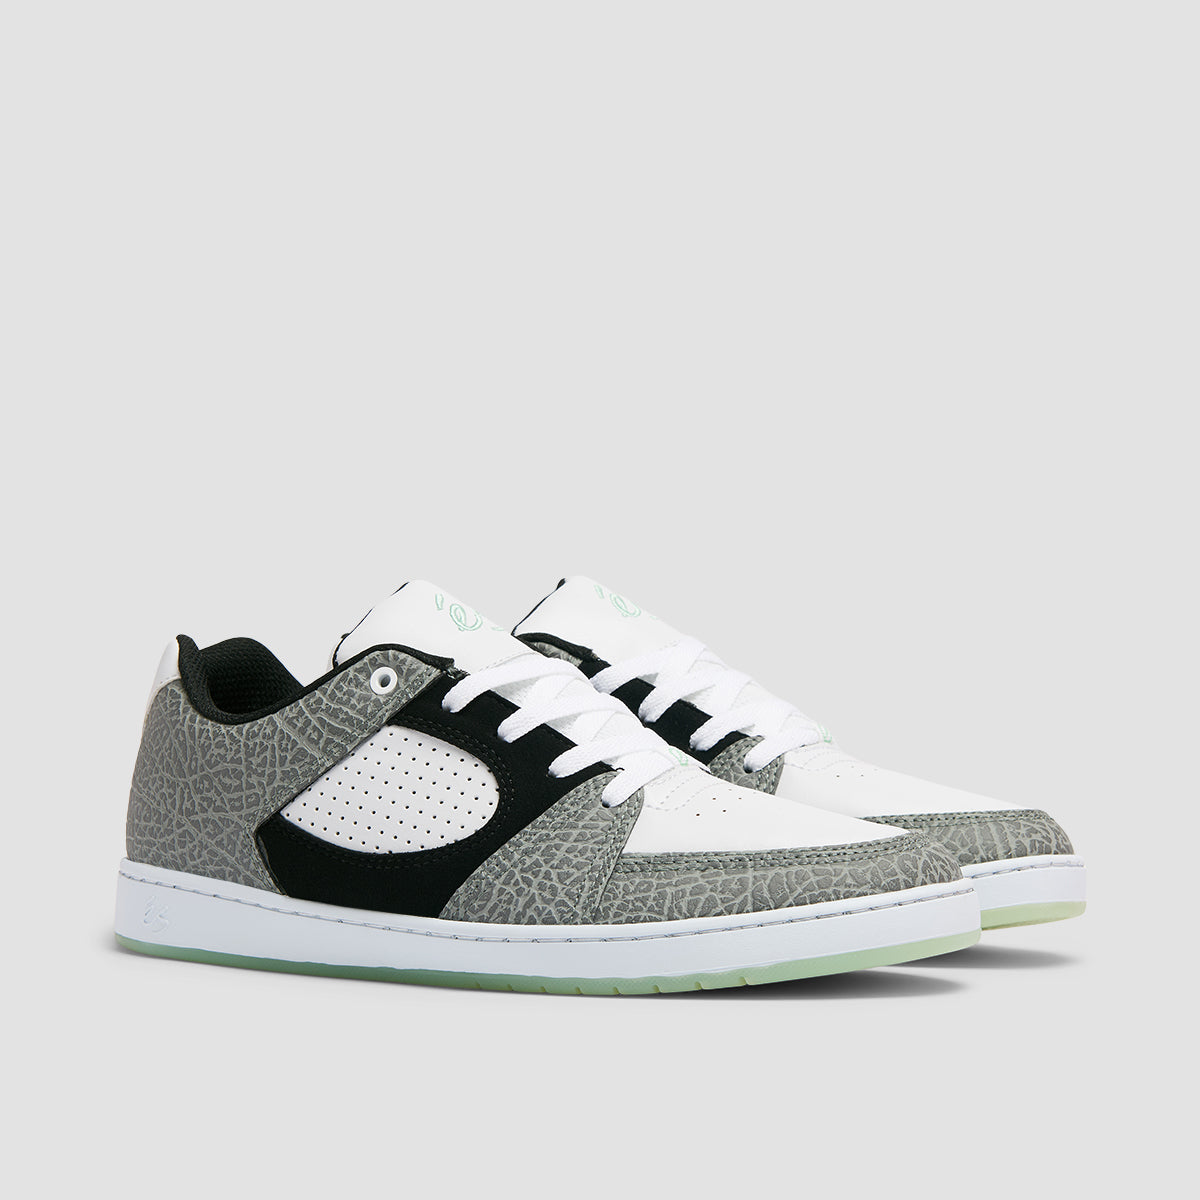 eS Accel Slim Shoes - Black/White/Turquoise